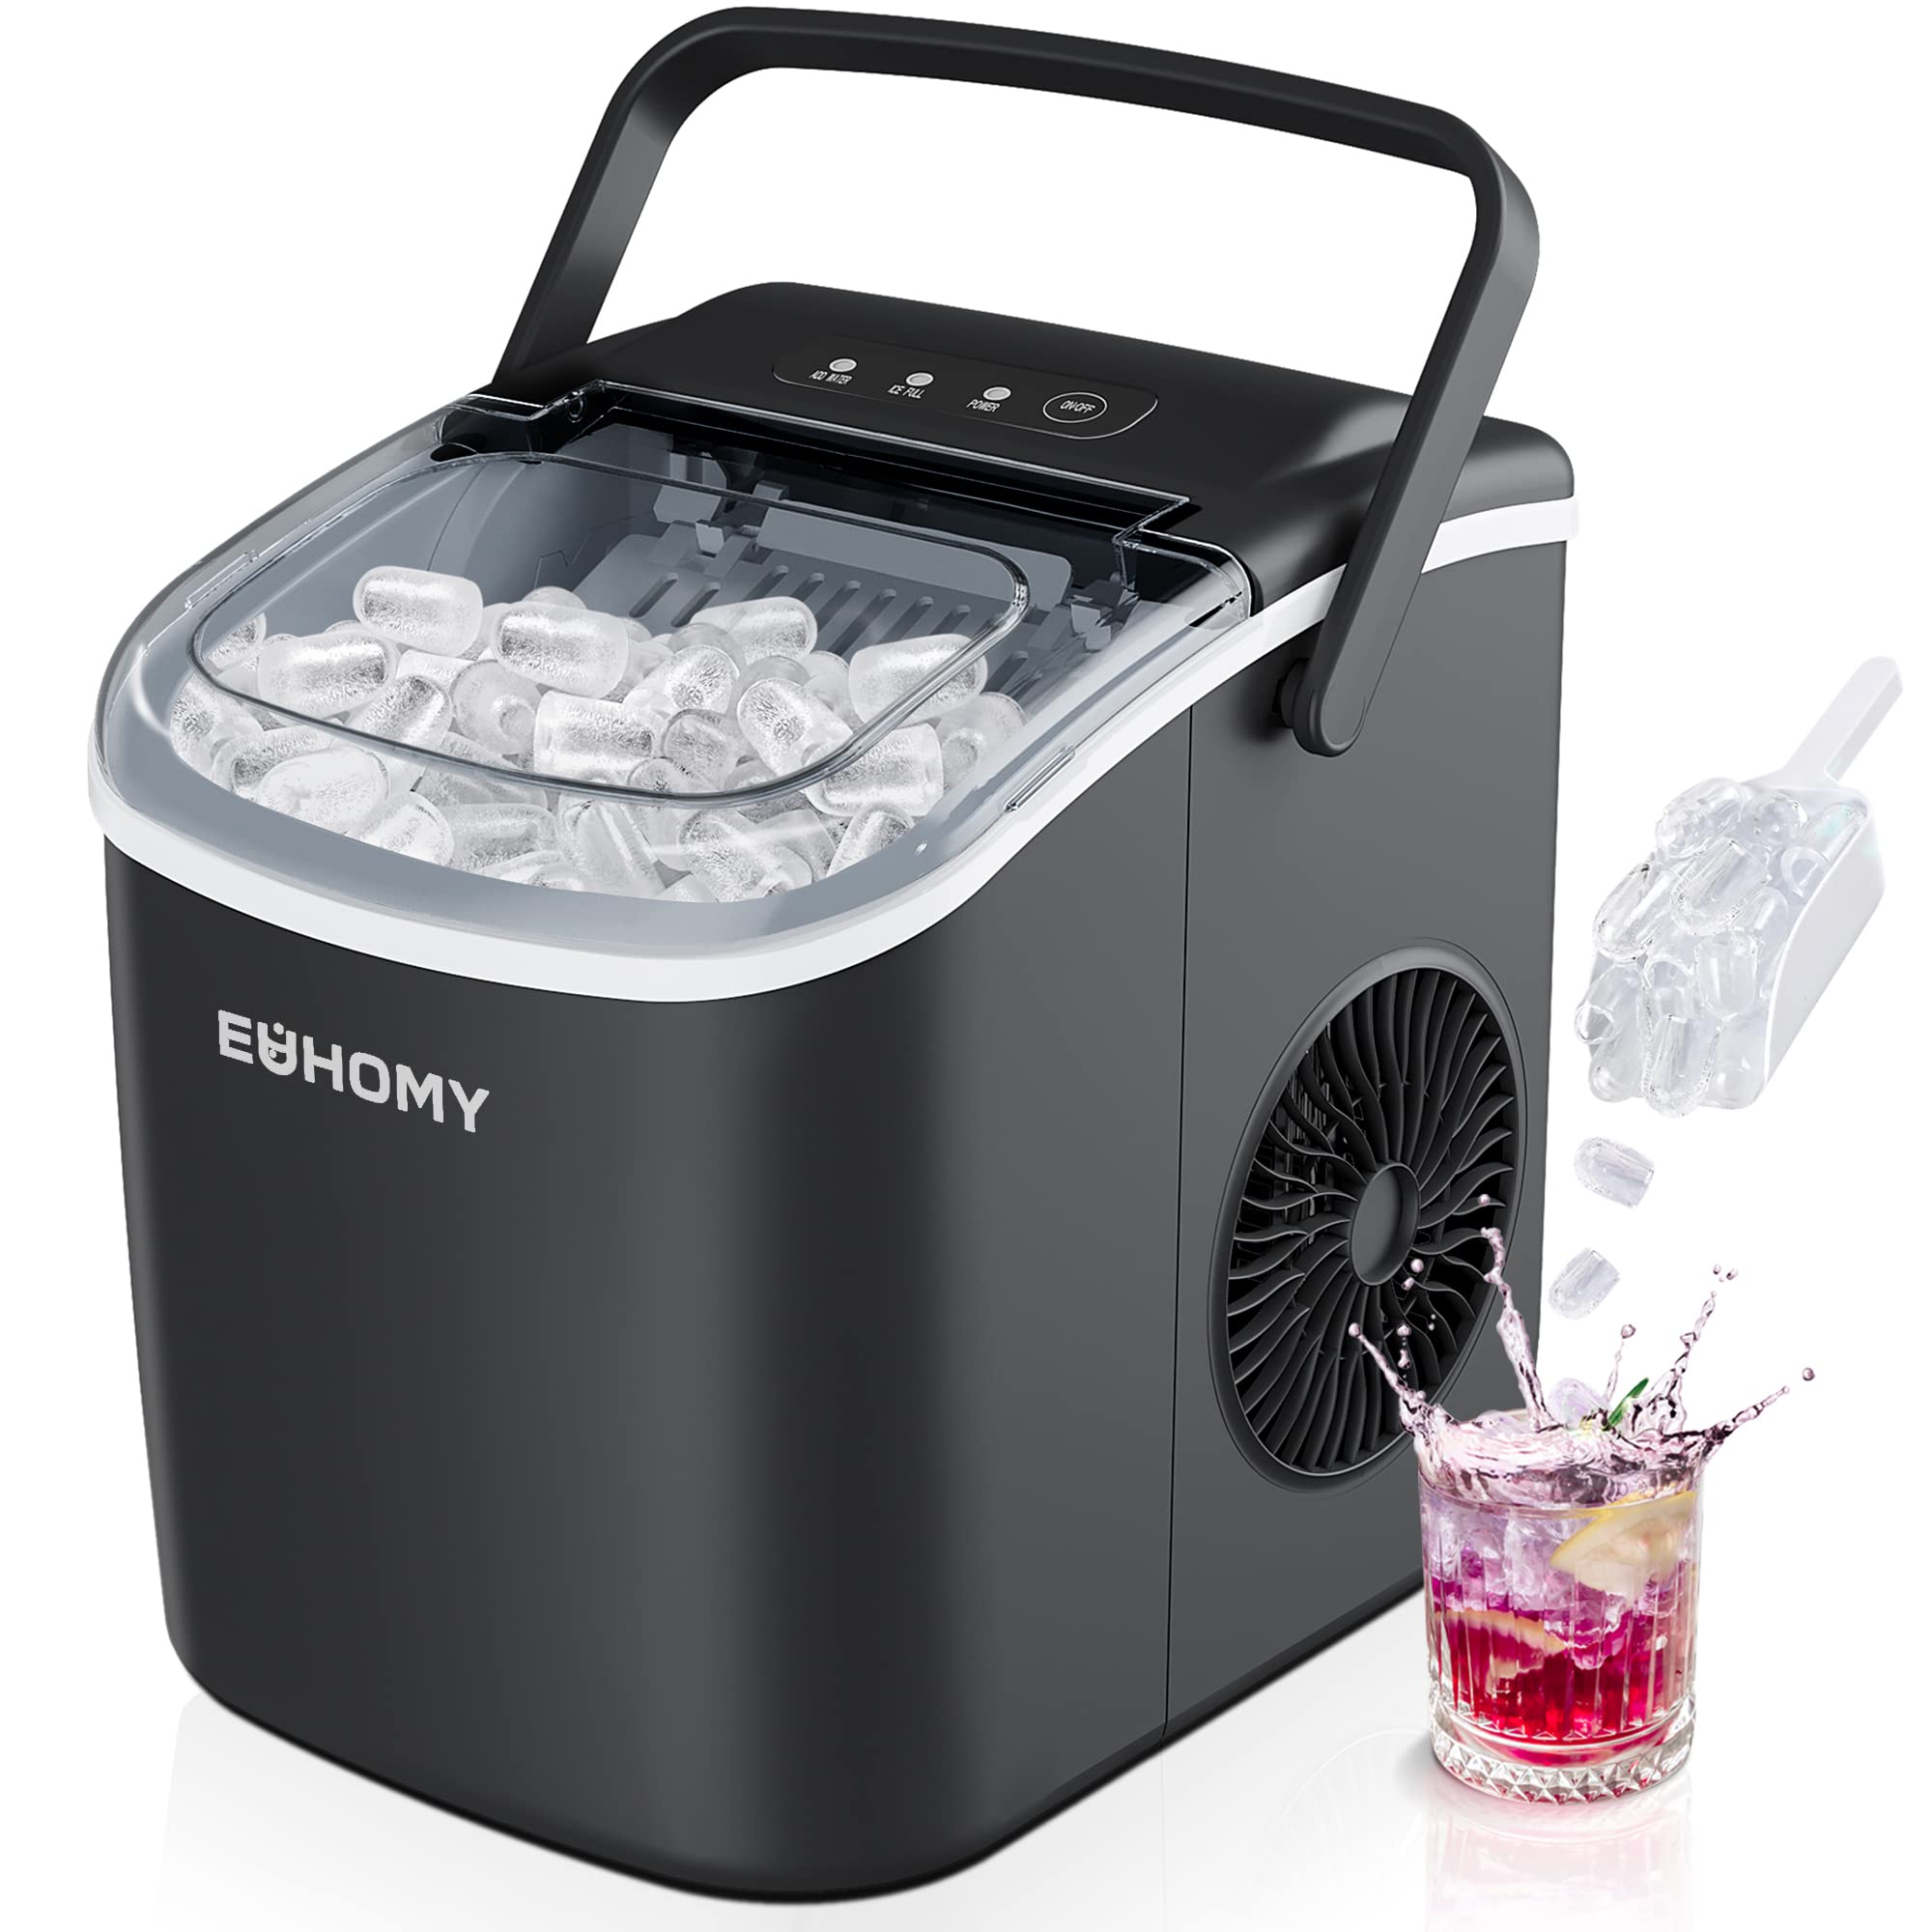 EUHOMY Countertop Ice Maker Machine with Handle